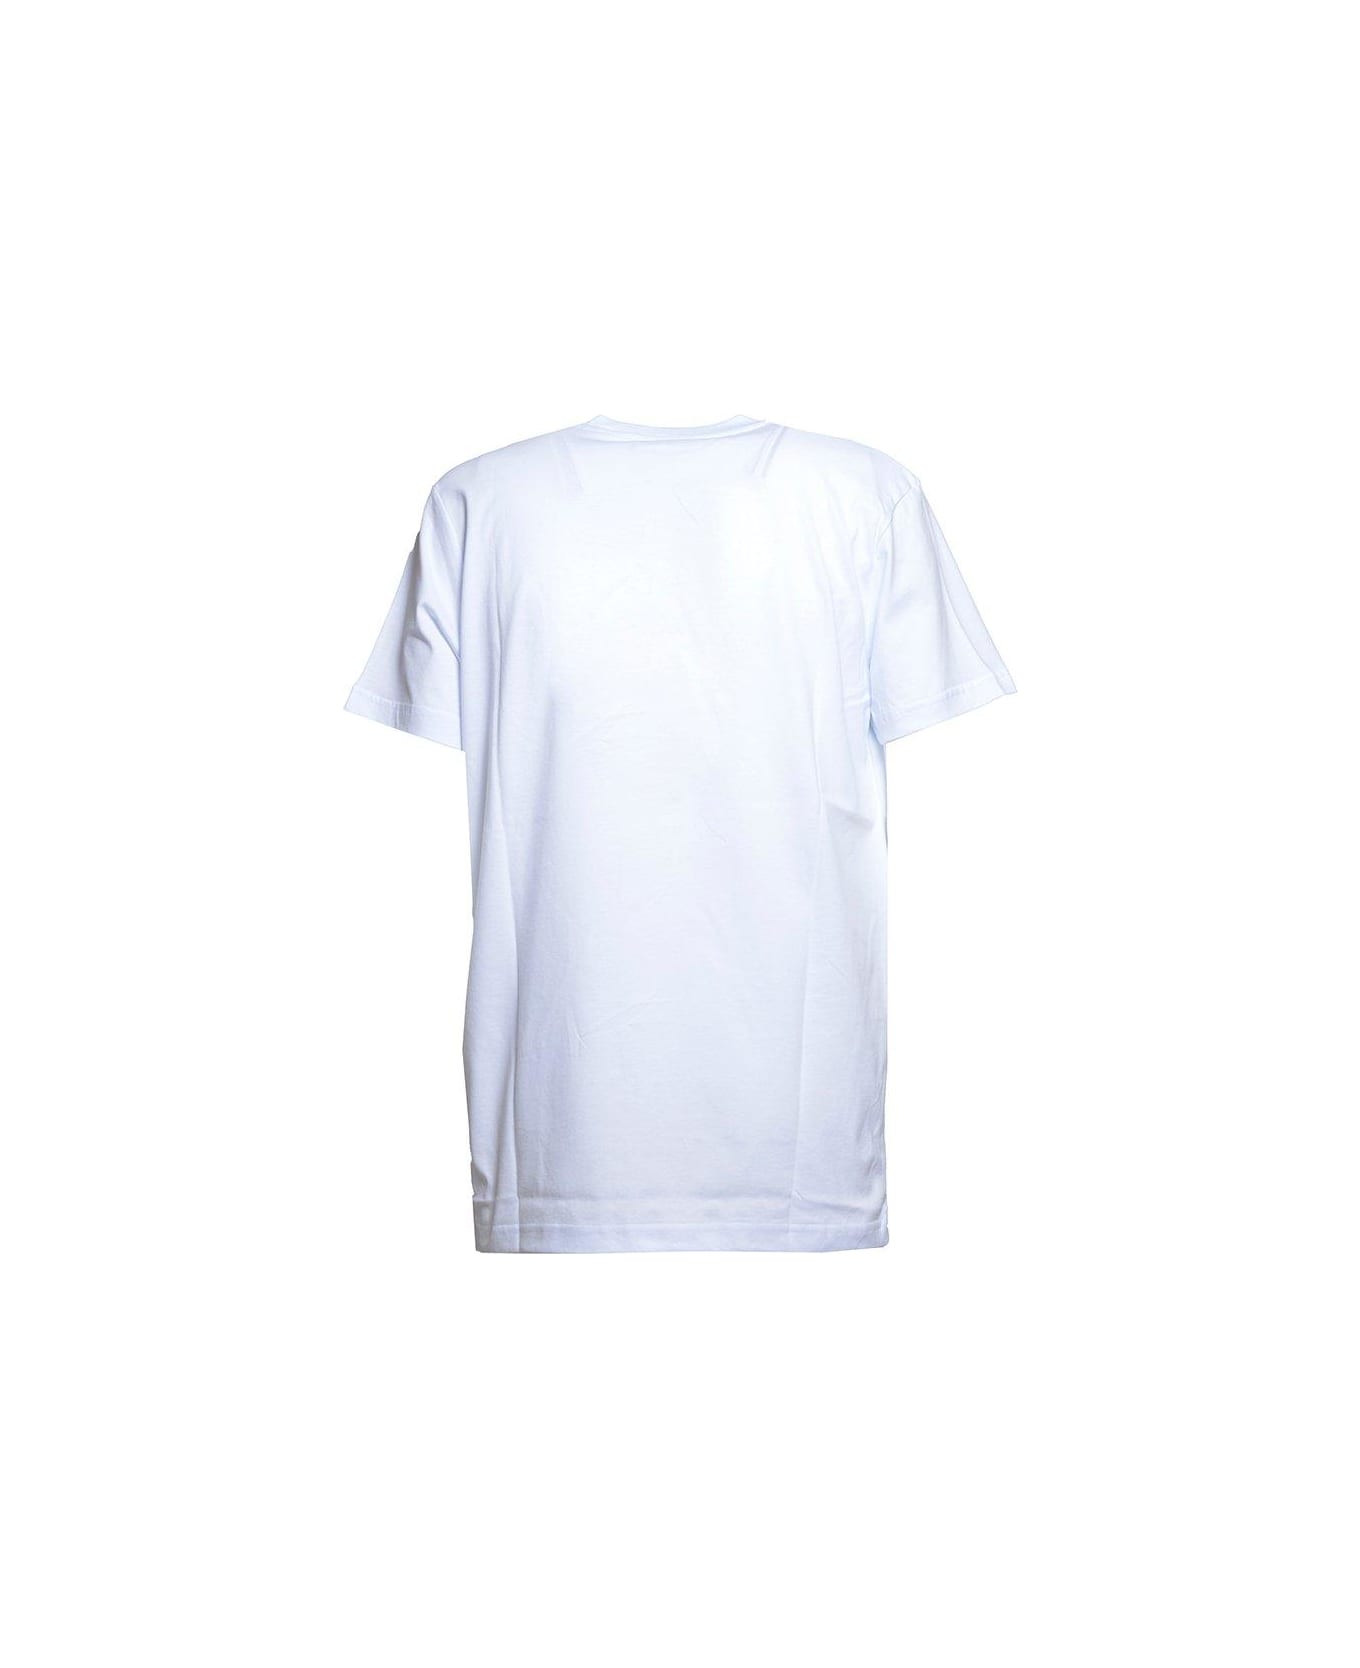 Philipp Plein Logo-patch Crerwneck T-shirt - Bianco/fucsia